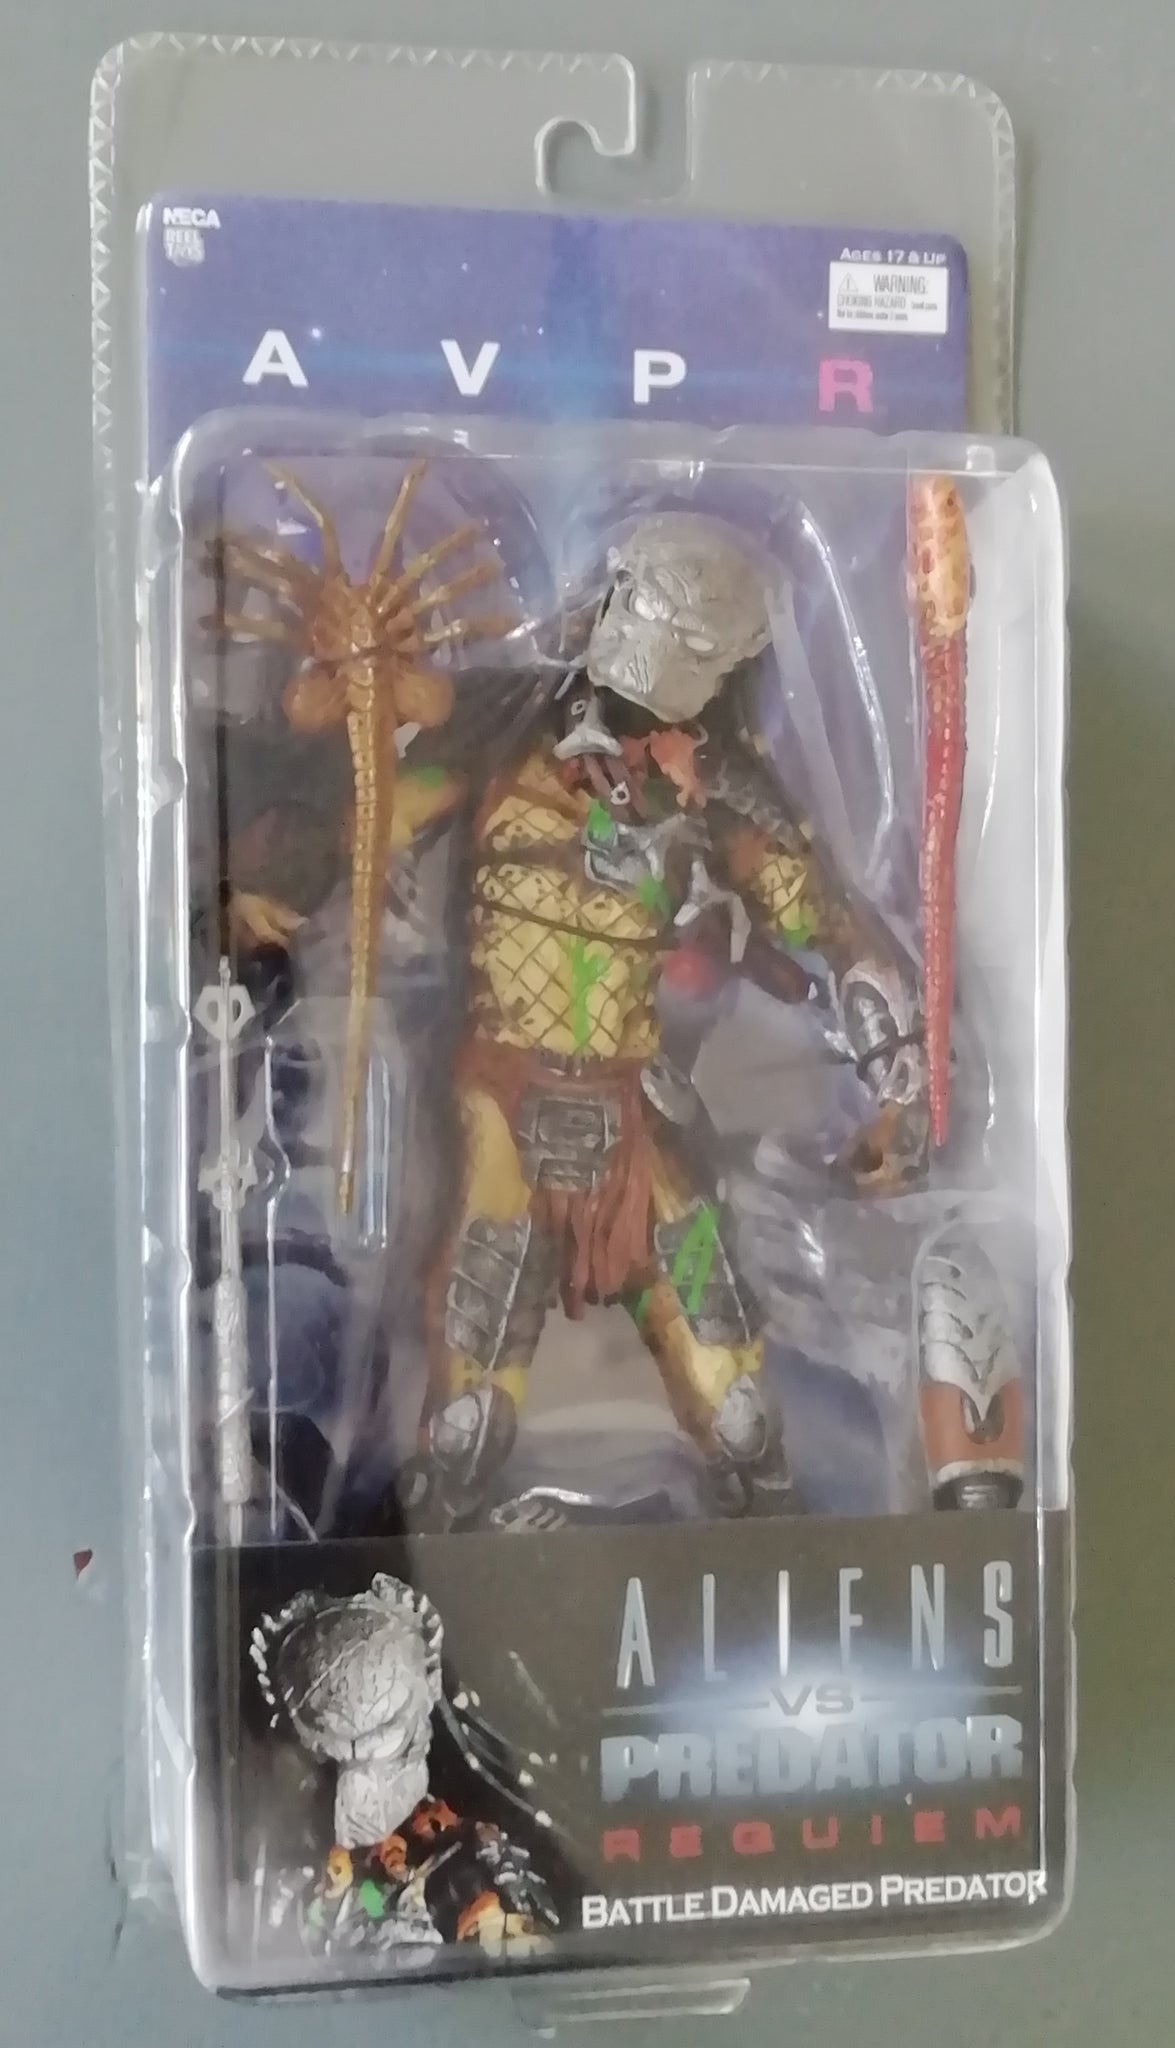 Alien vs Predator Requiem - Battle Damaged Predator Action Figure